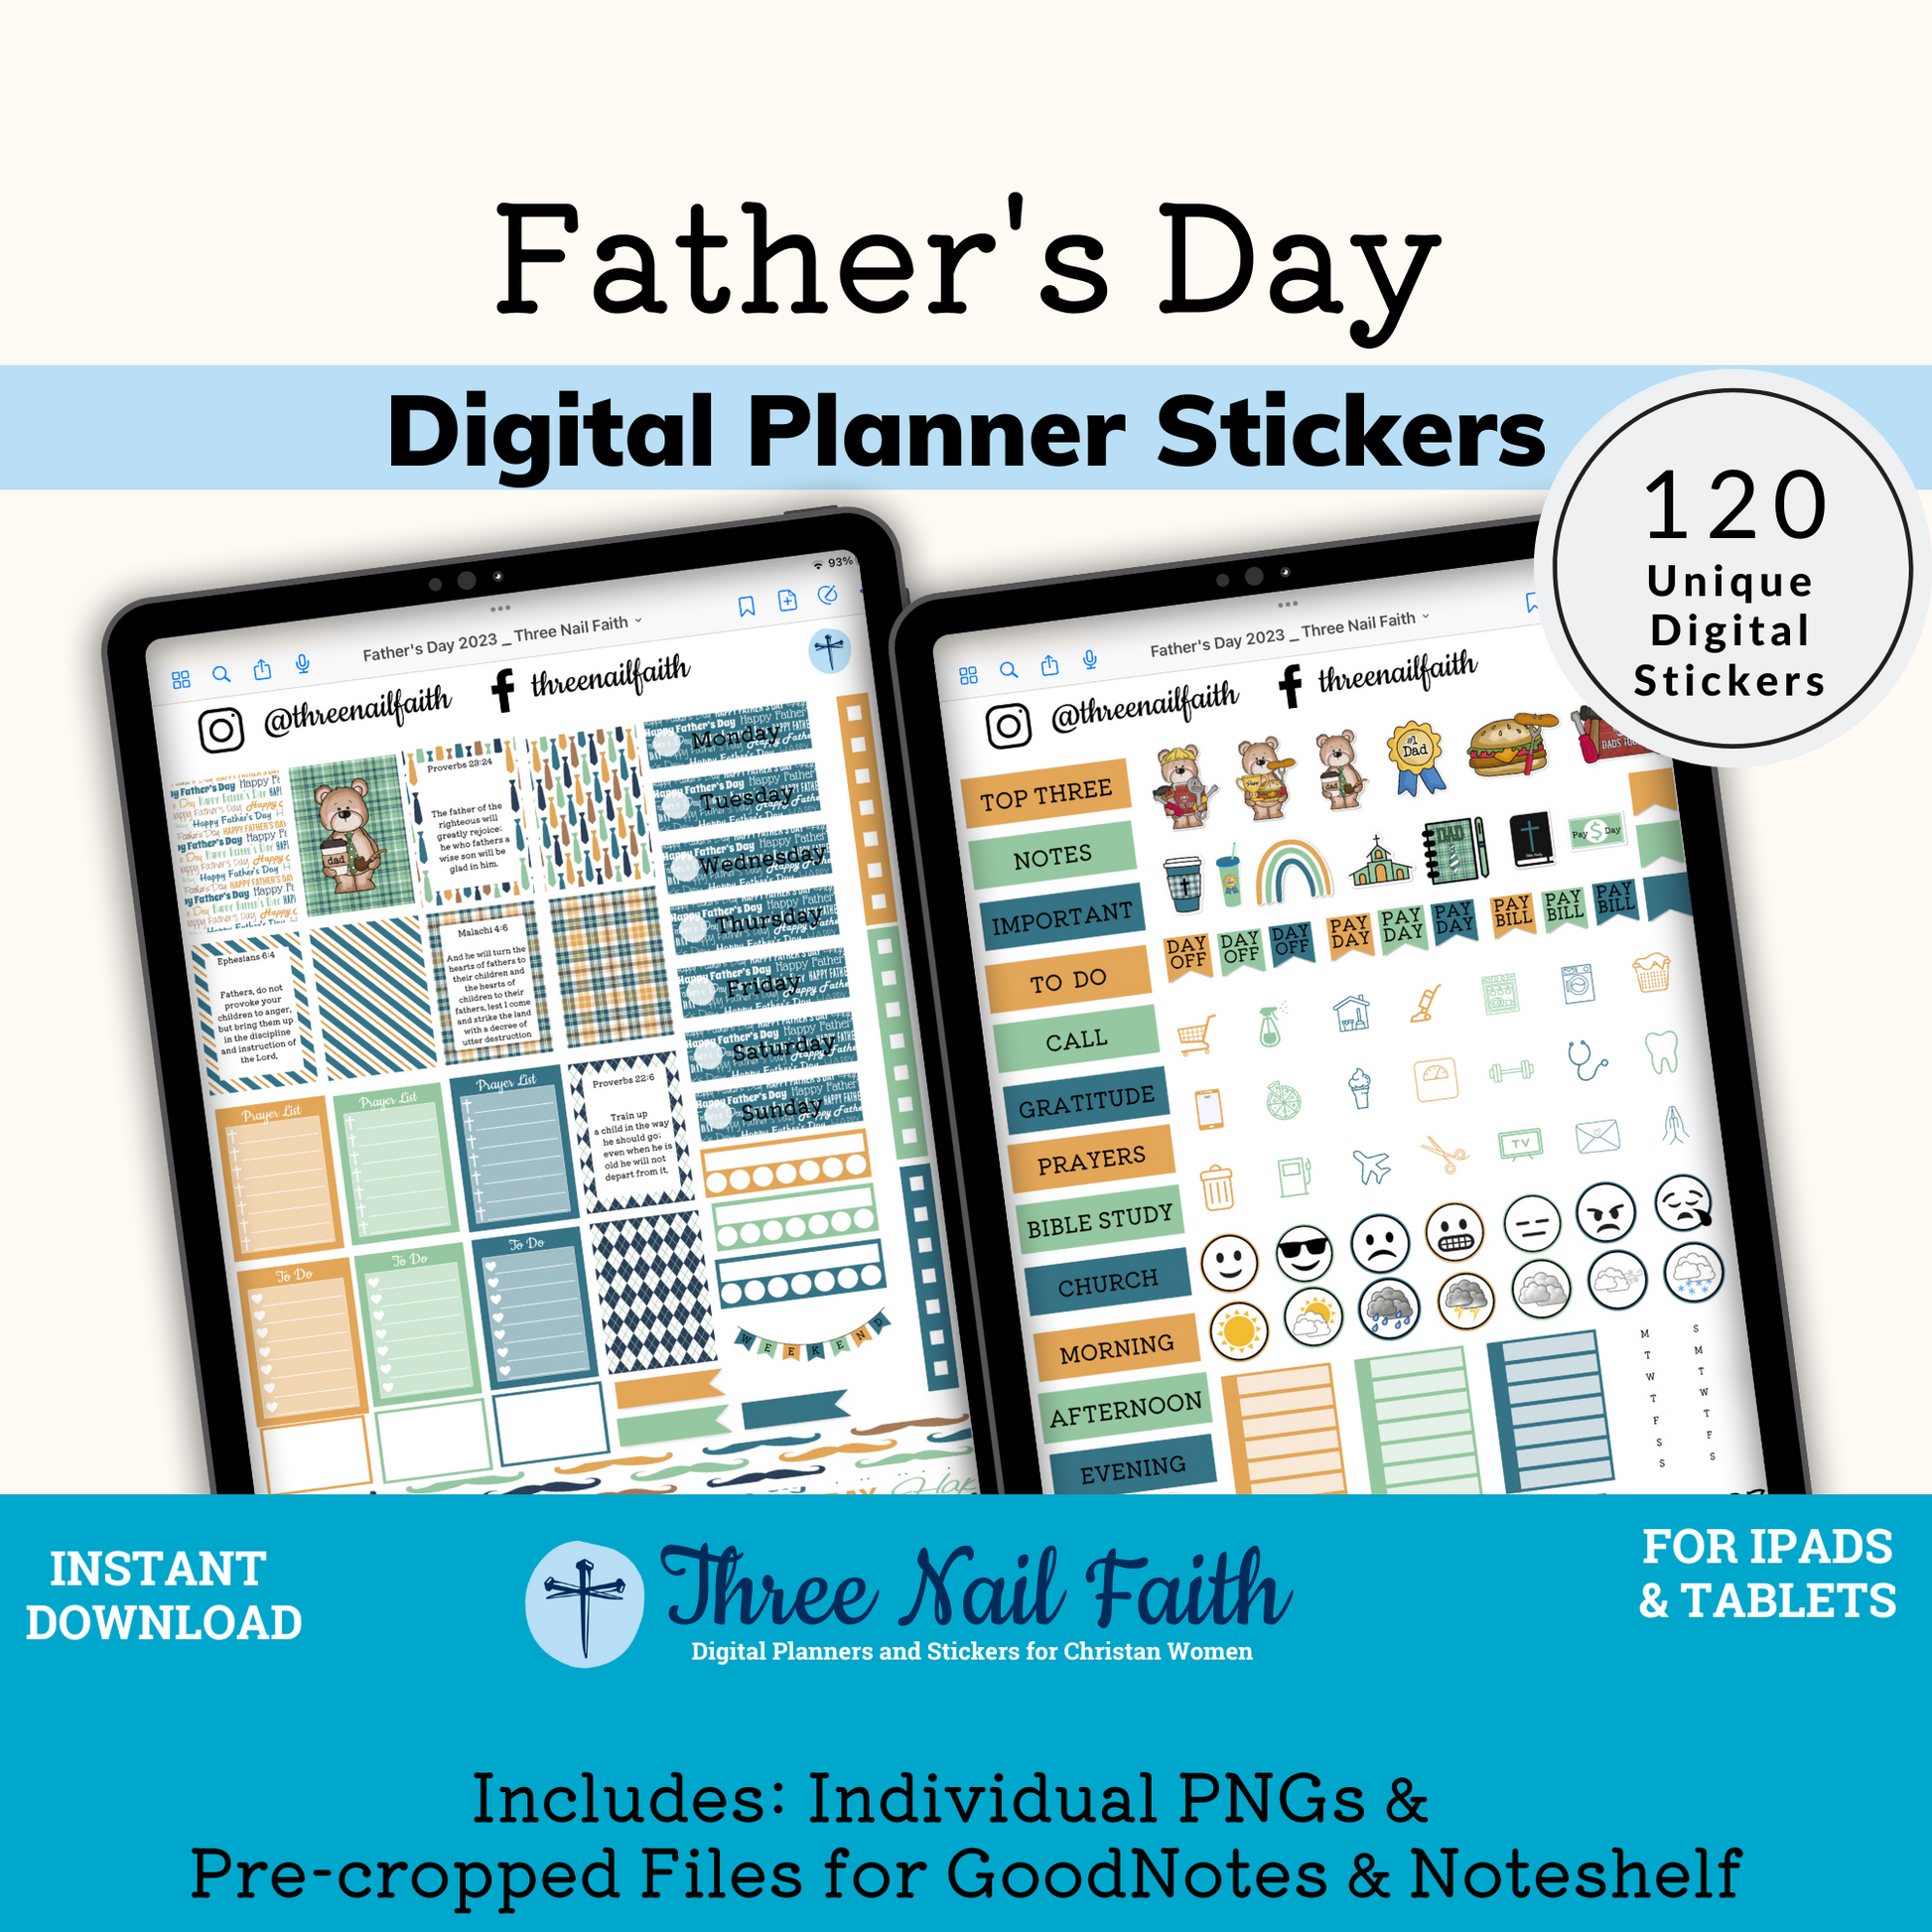 Fathers day digital sticker kit with 120 Digital stickers